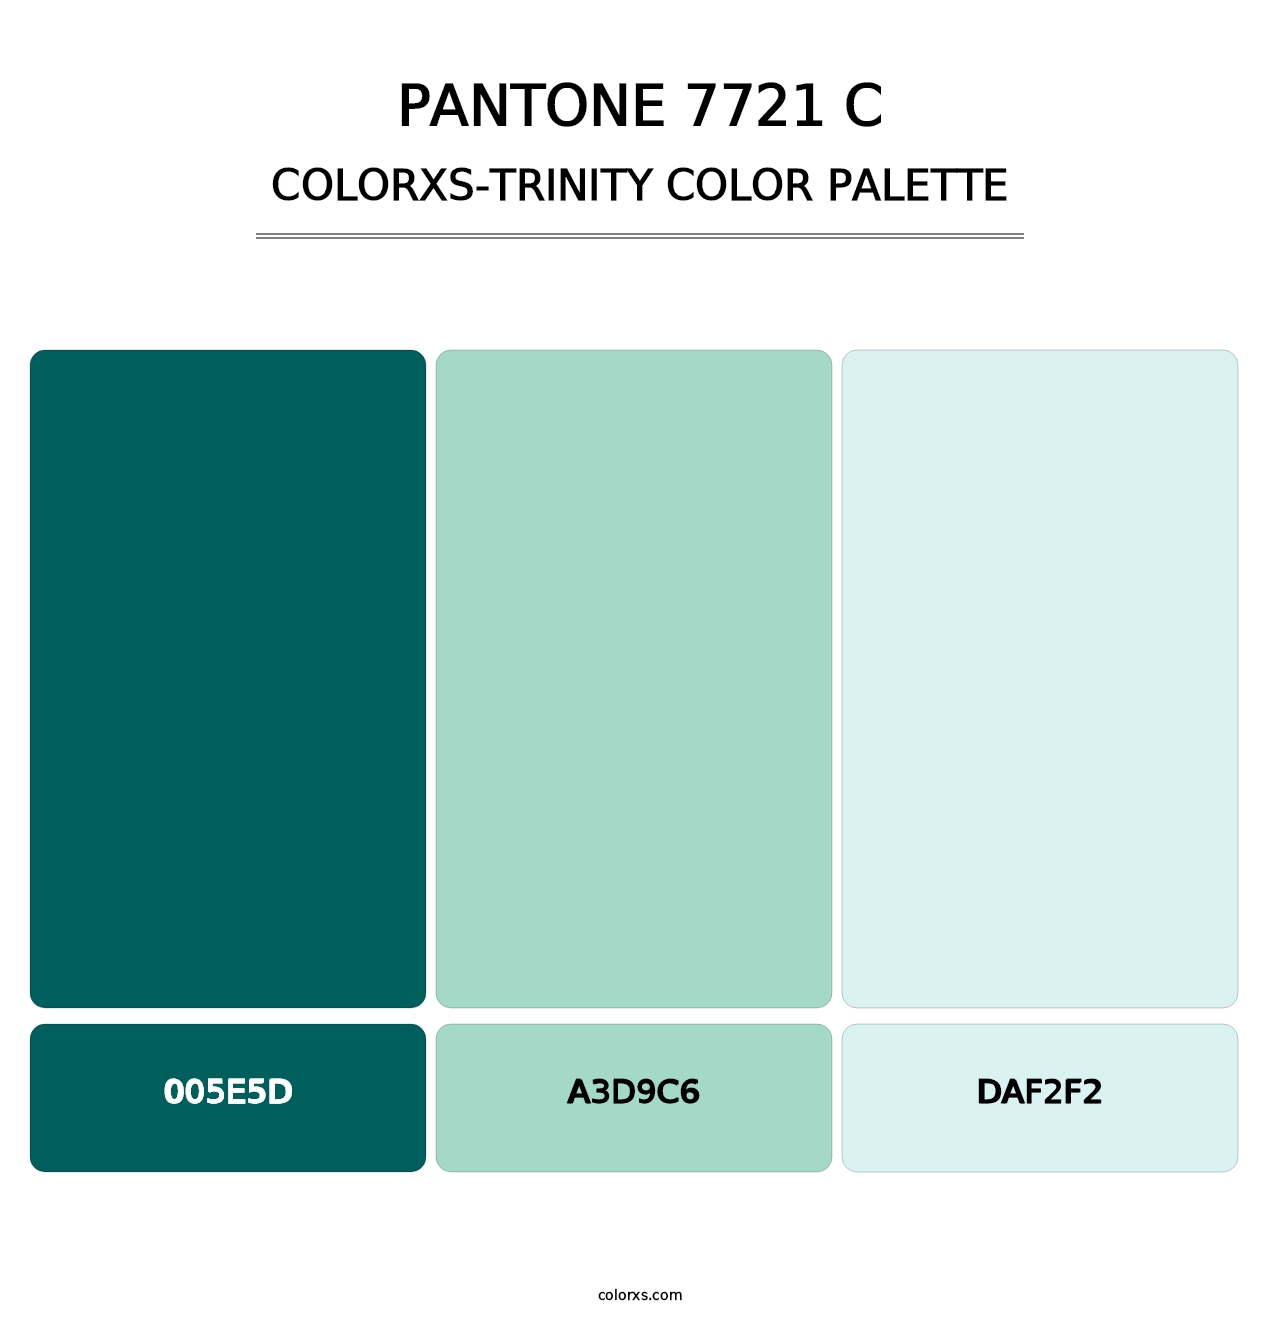 PANTONE 7721 C - Colorxs Trinity Palette